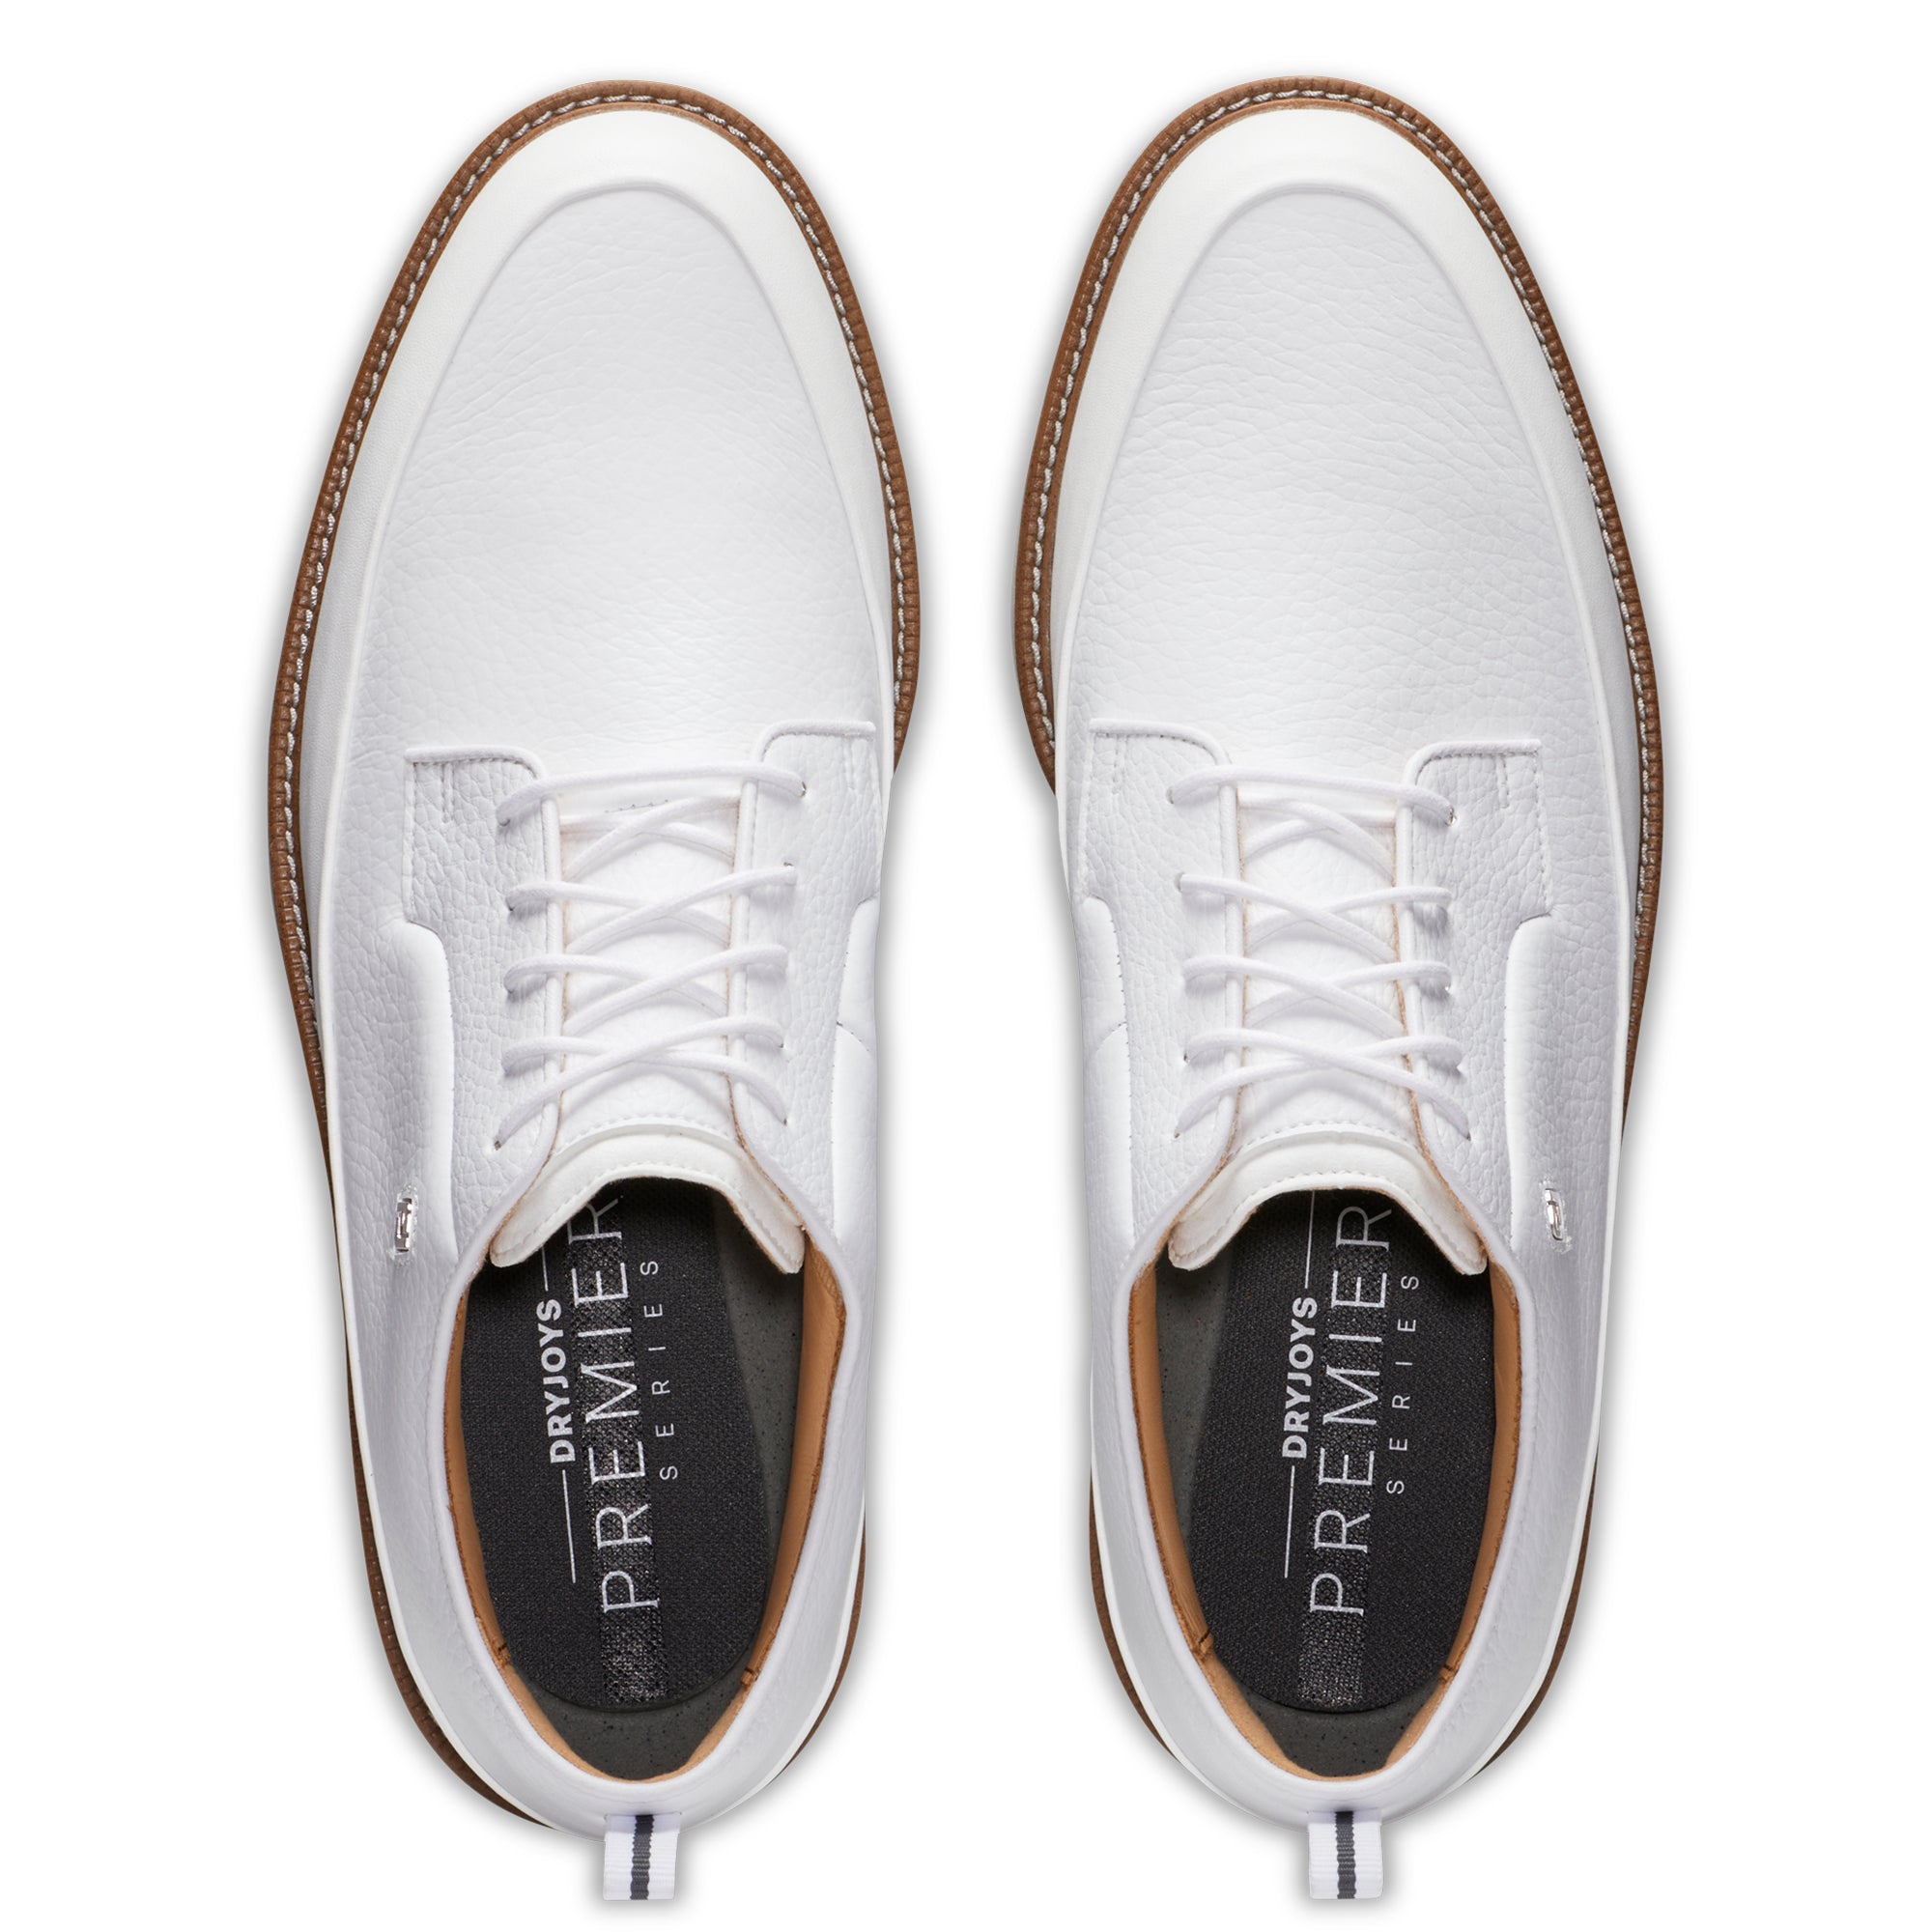 footjoy-premiere-series-field-lx-golf-shoes-54394-white-cool-white-grey